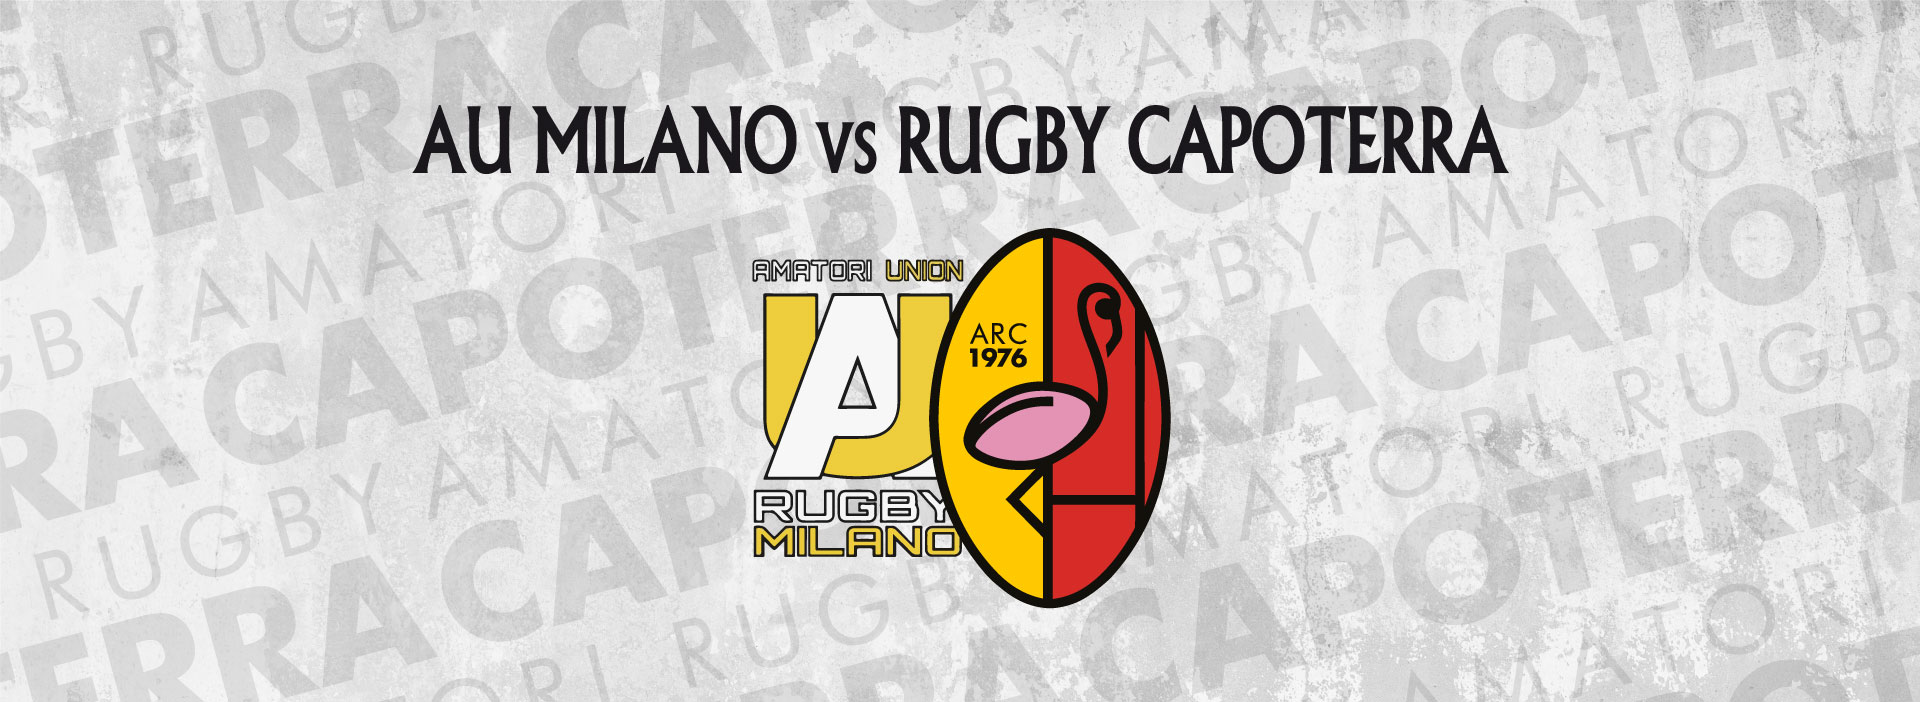 AU Milano vs Rugby Capoterra